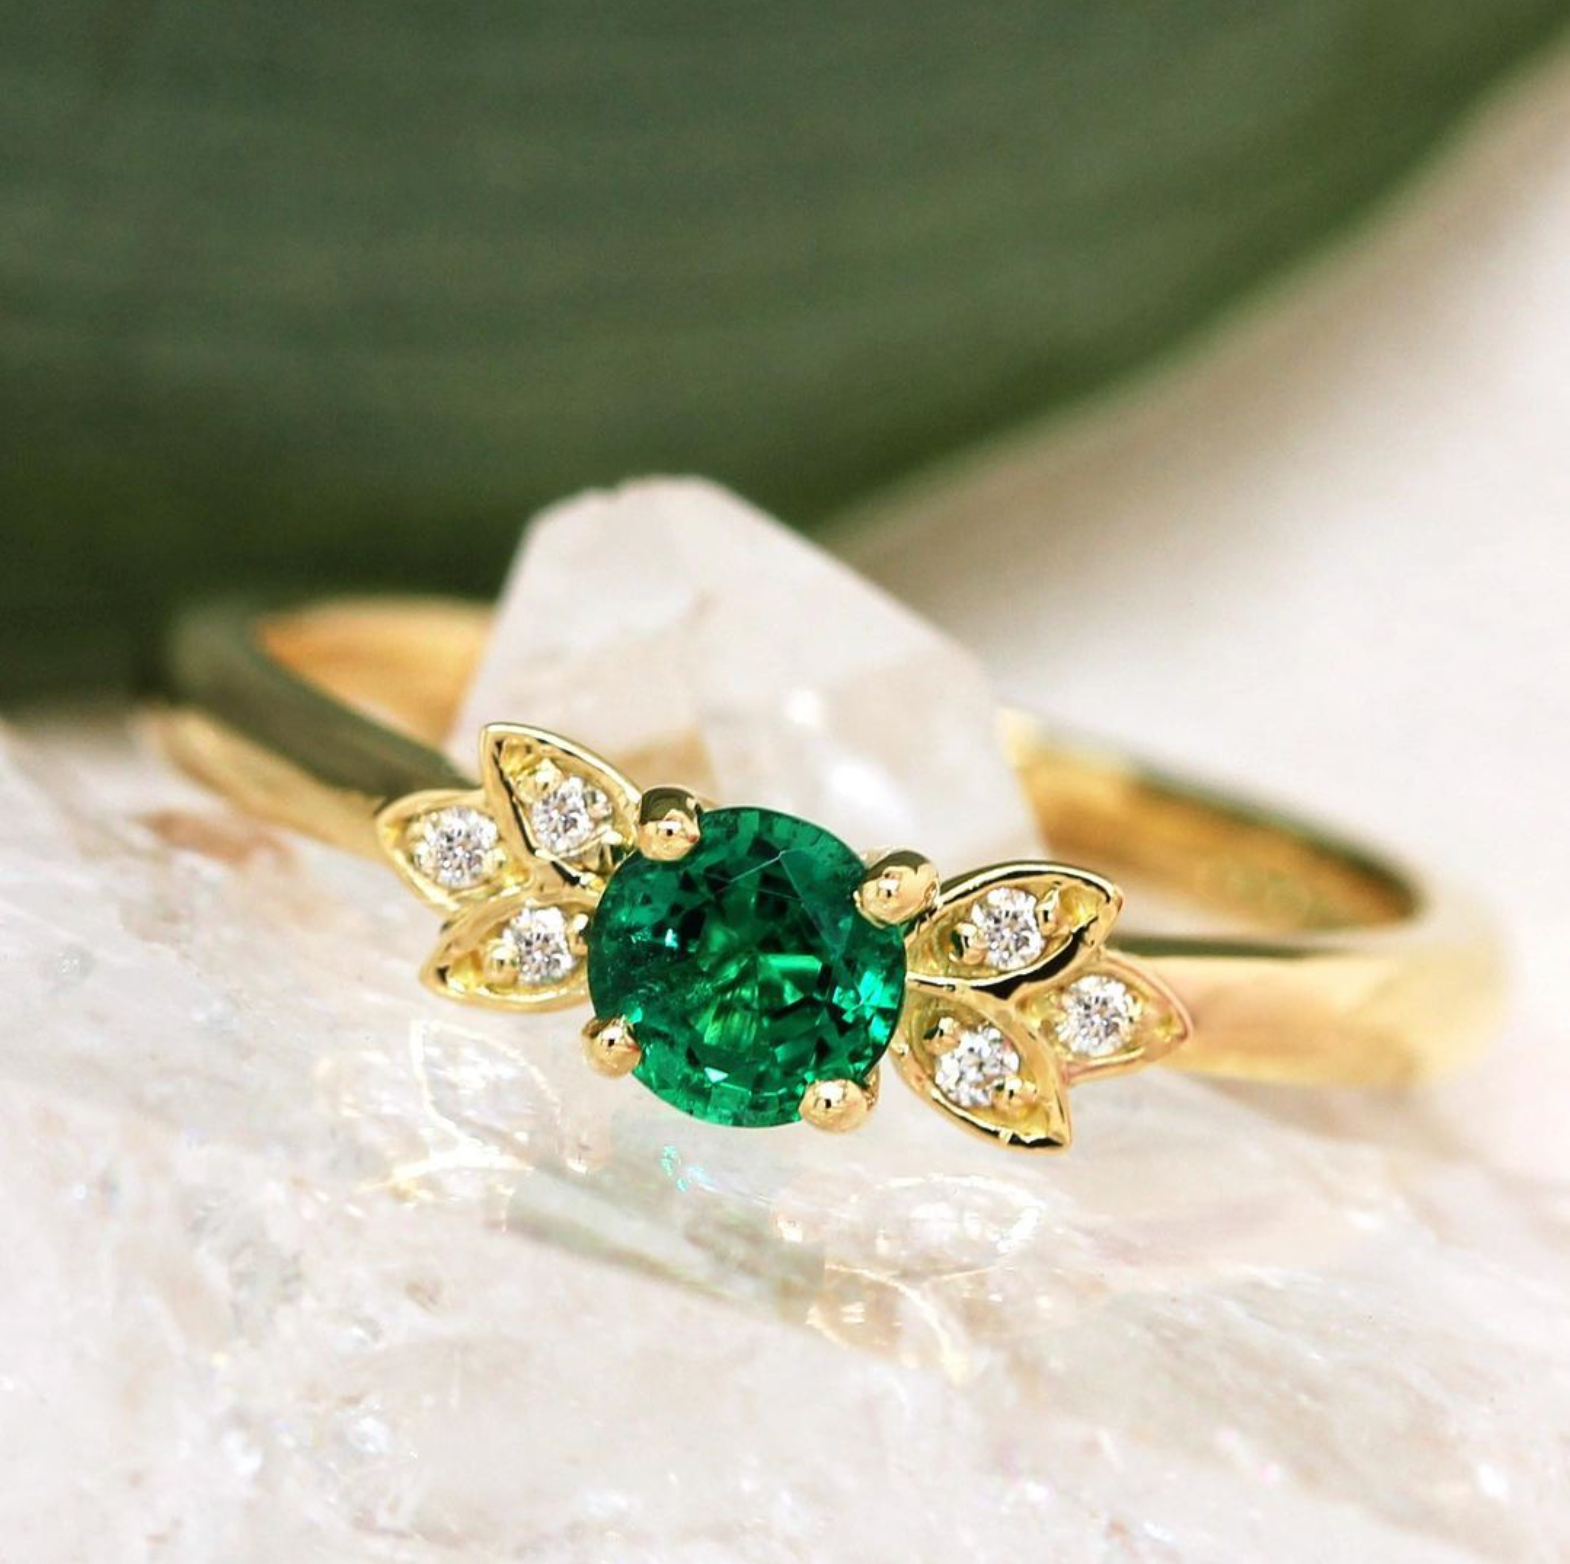 1.75 Carat Green Emerald & Diamond Ring in White Gold